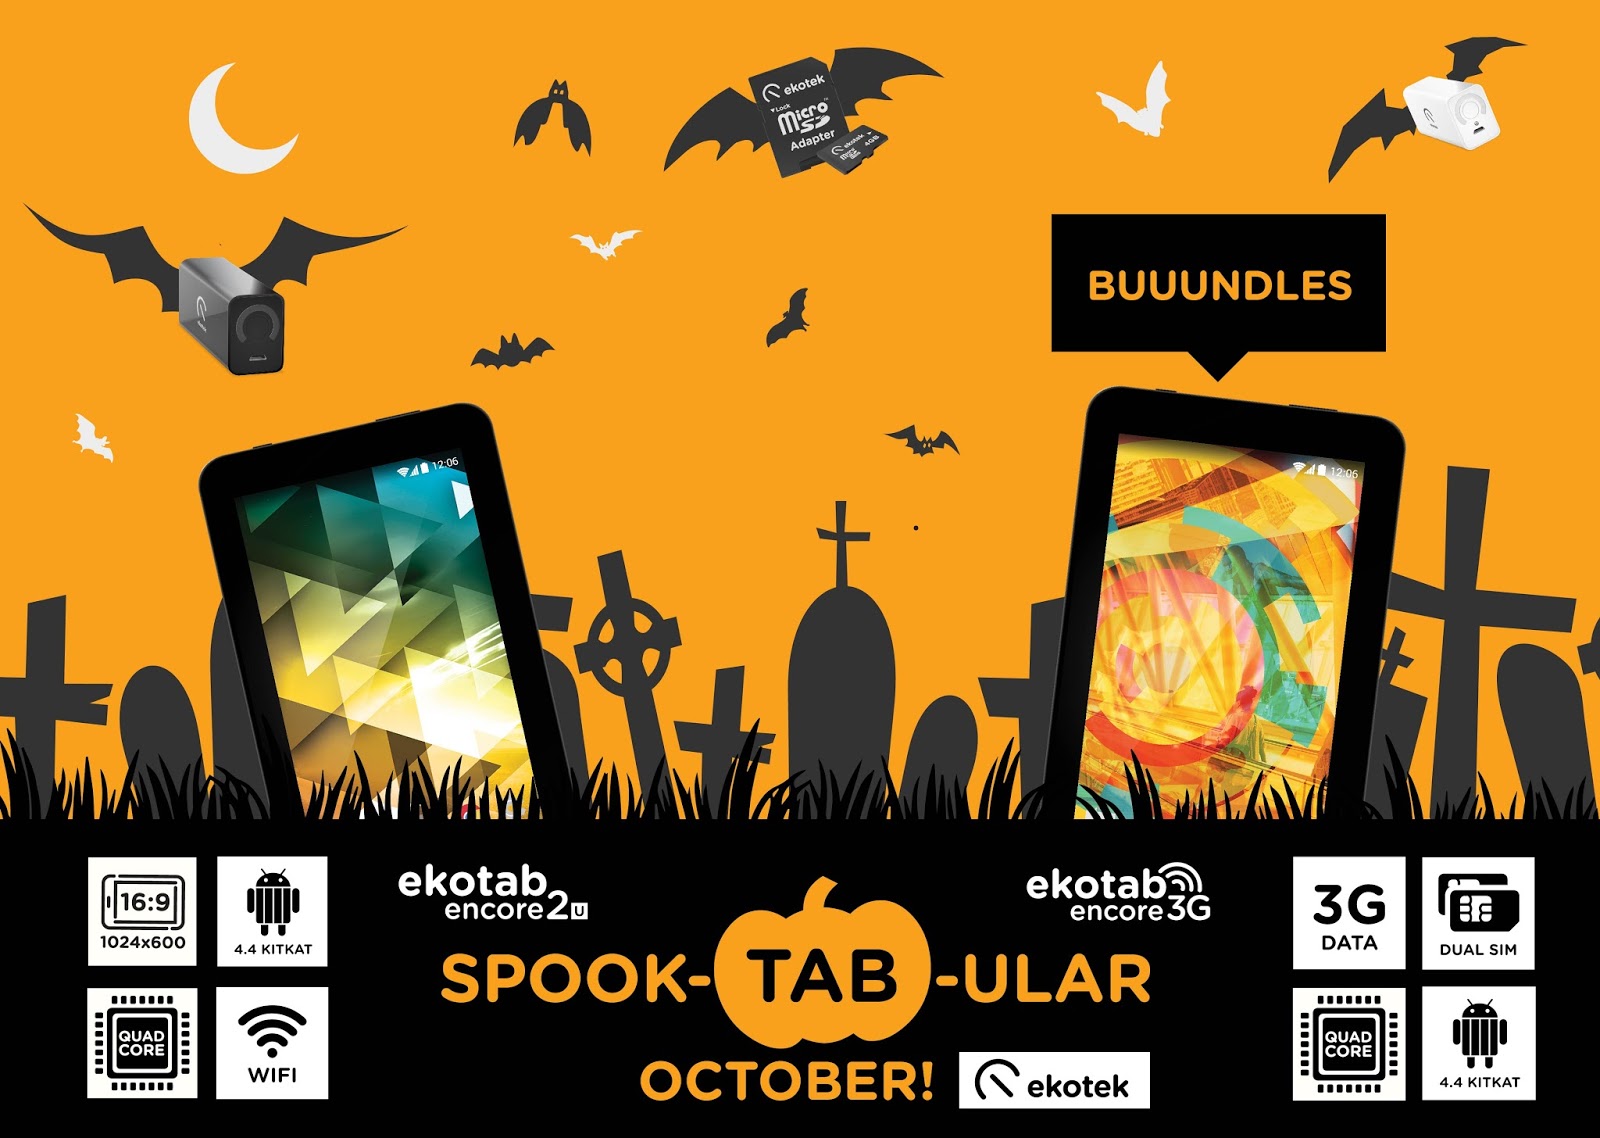 Ekotek's SpookTABular October Promo!